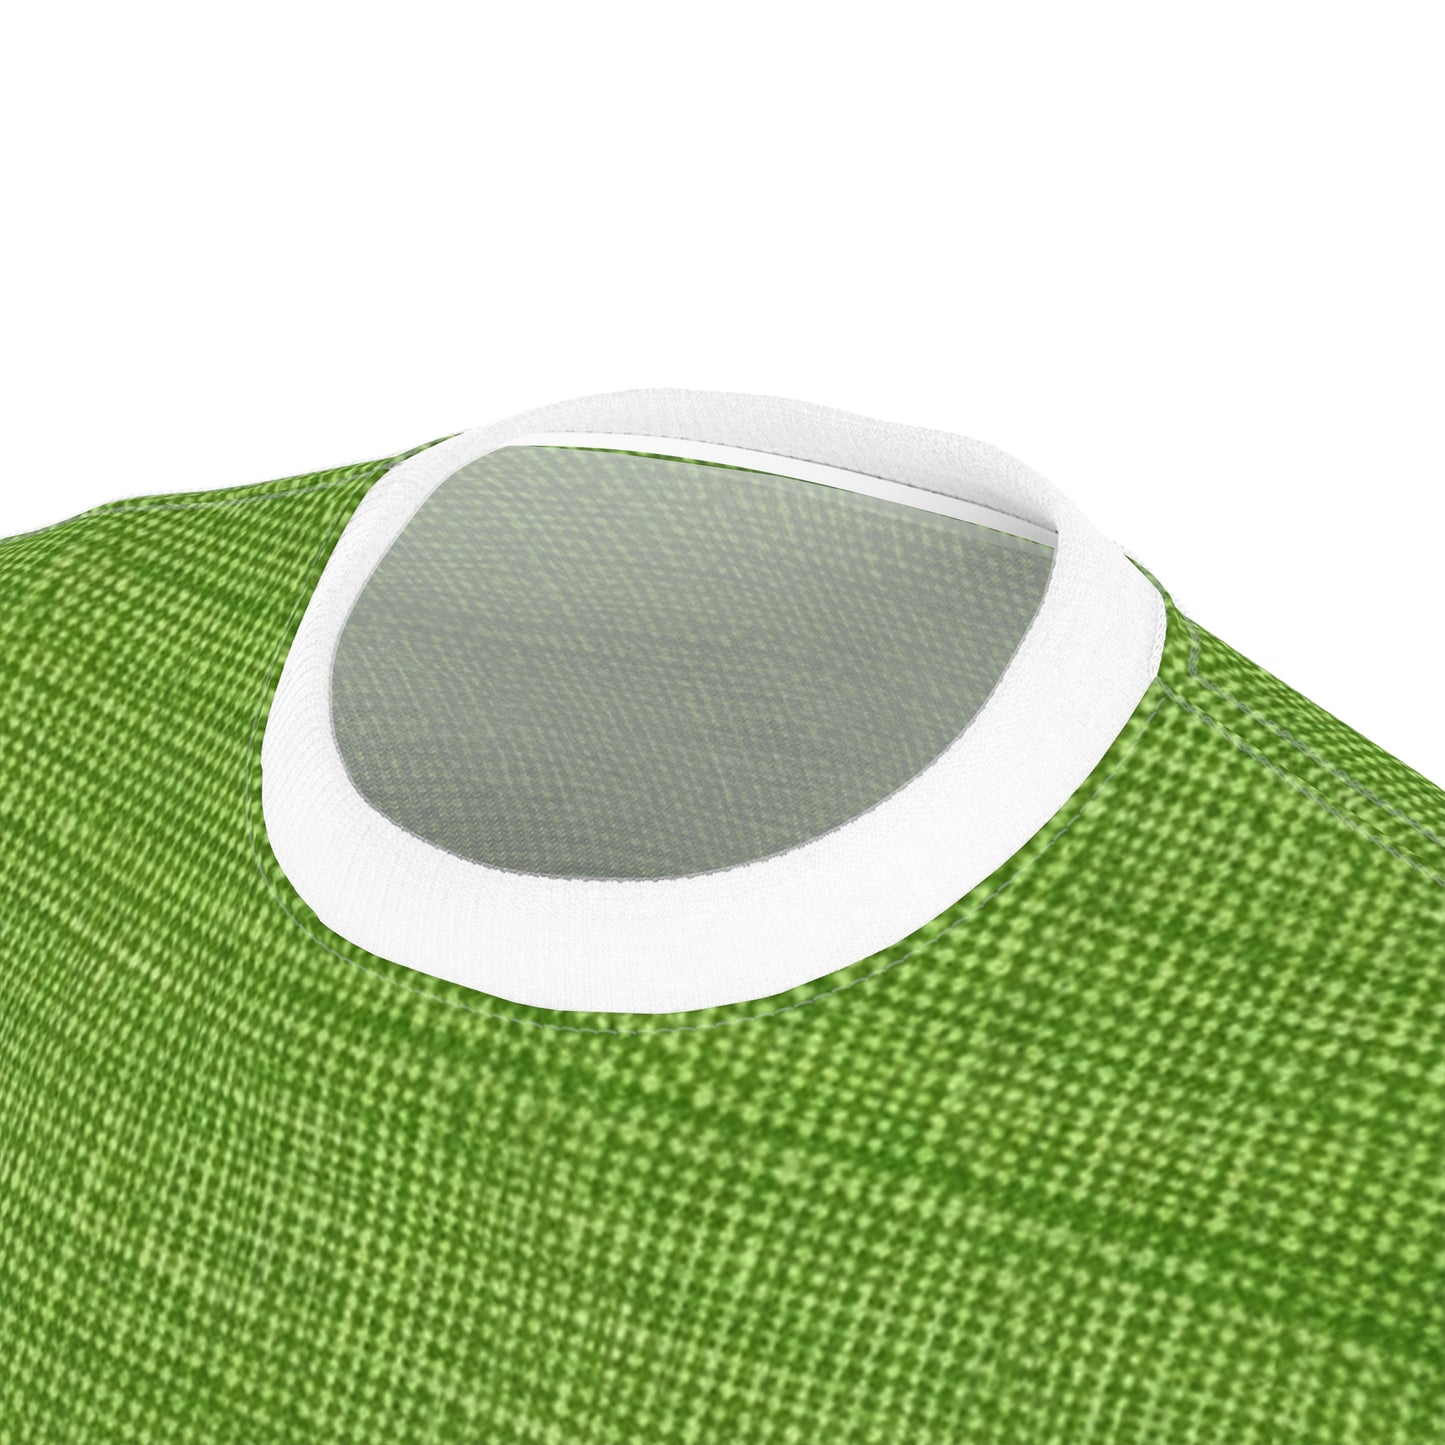 Olive Green Denim-Style: Seamless, Textured Fabric - Unisex Cut & Sew Tee (AOP)